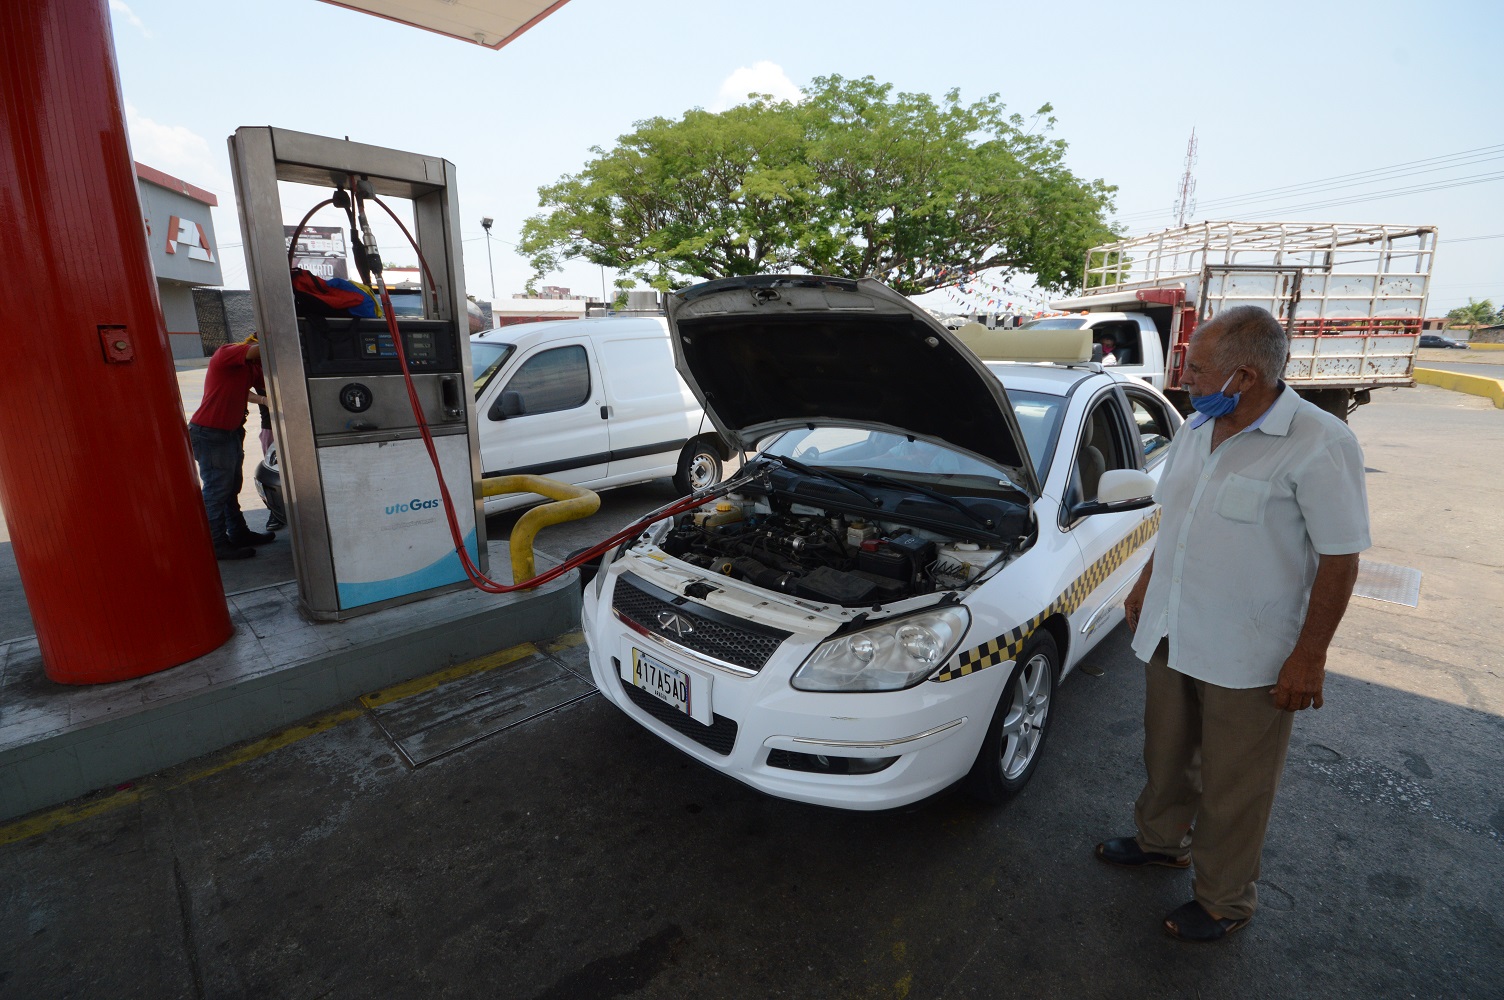 Carros con motor a gas en Venezuela - Carros con motor a gas en Venezuela